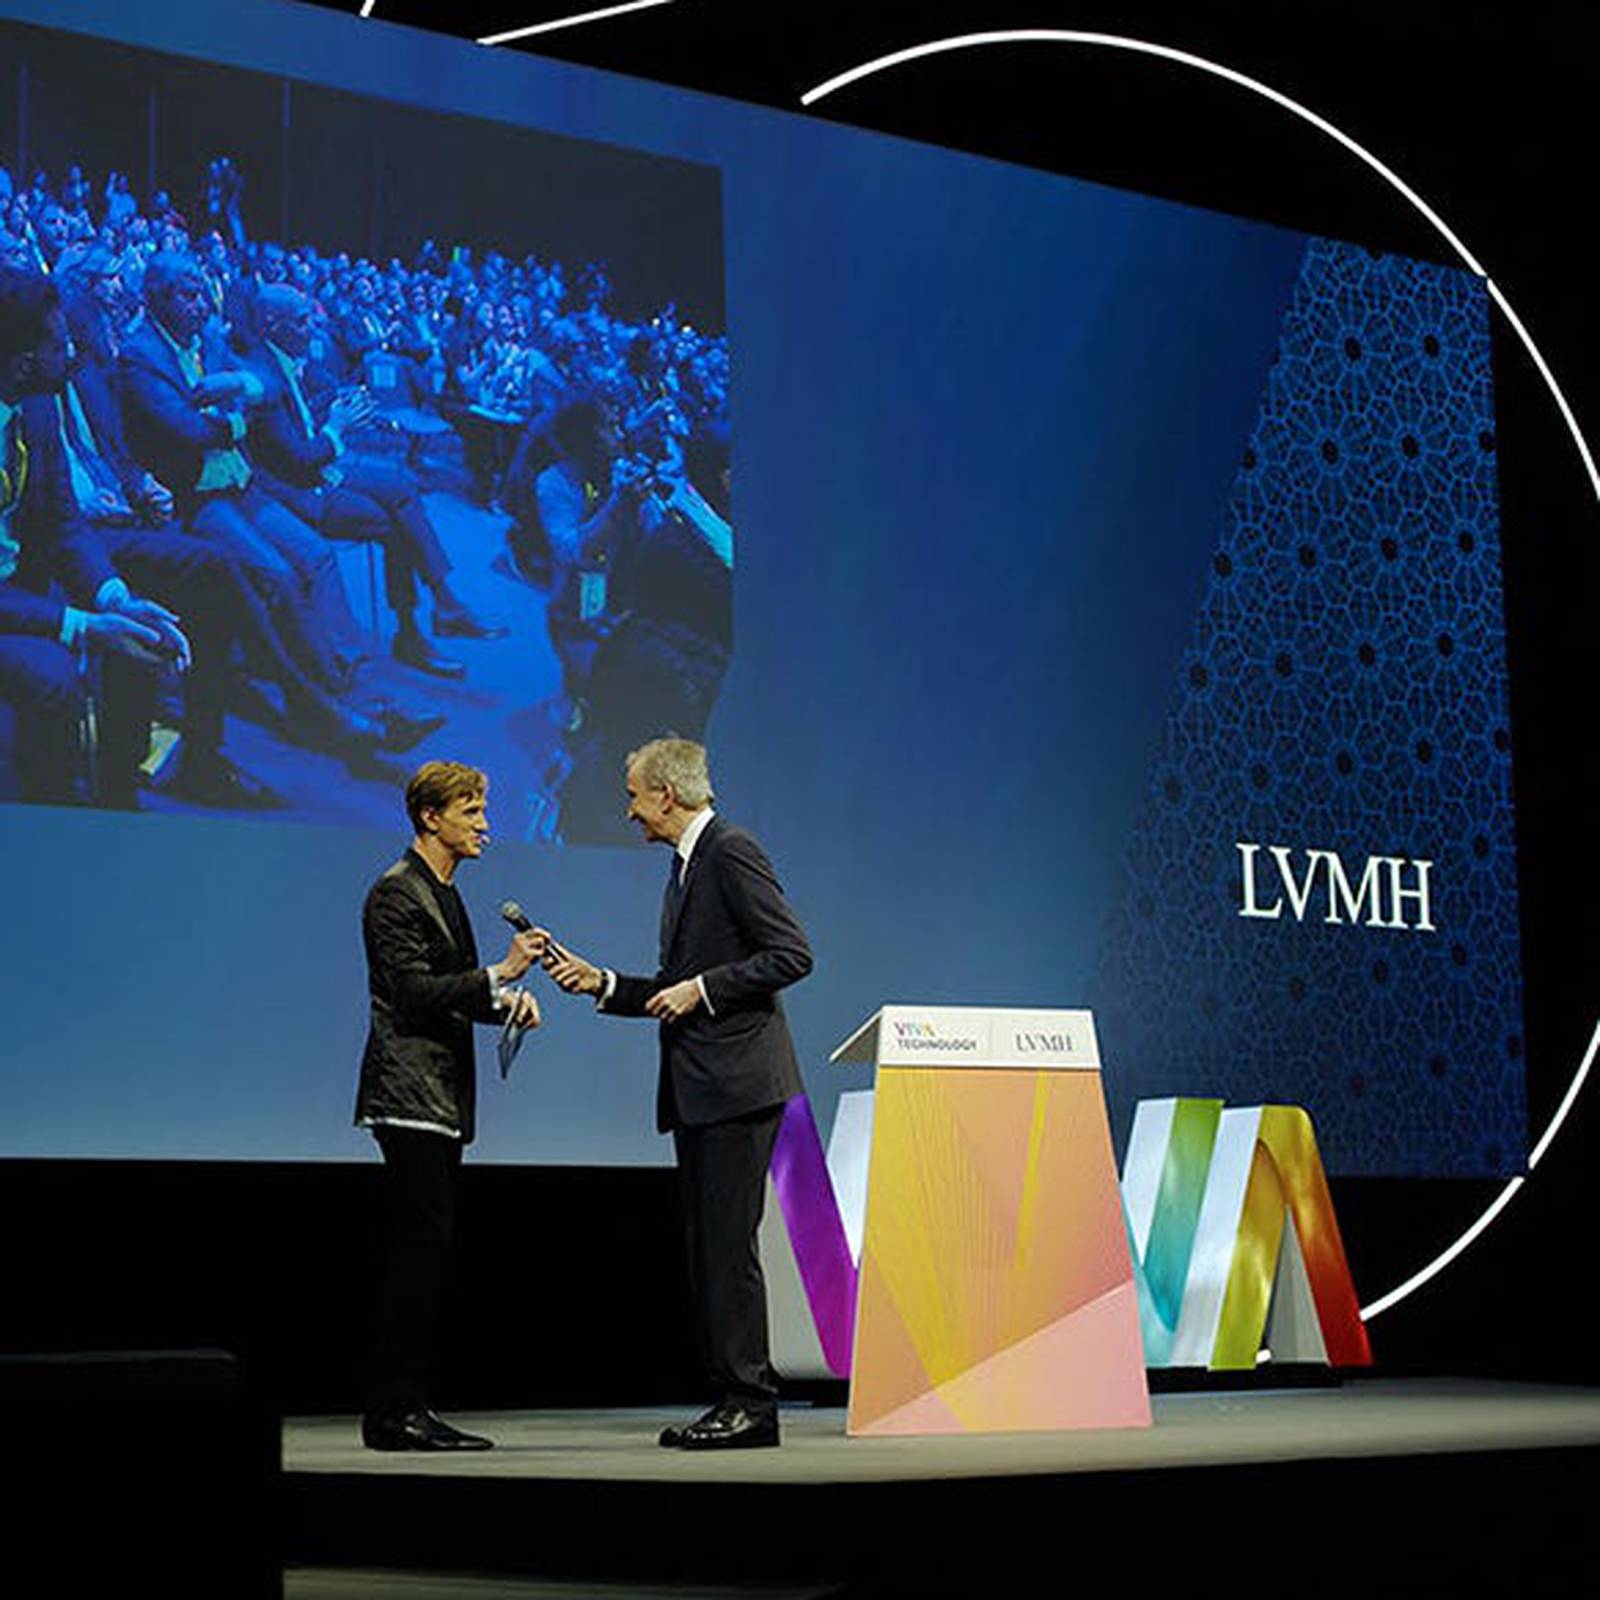 Inside VivaTech with Bernard Arnault and the LVMH Innovation Award